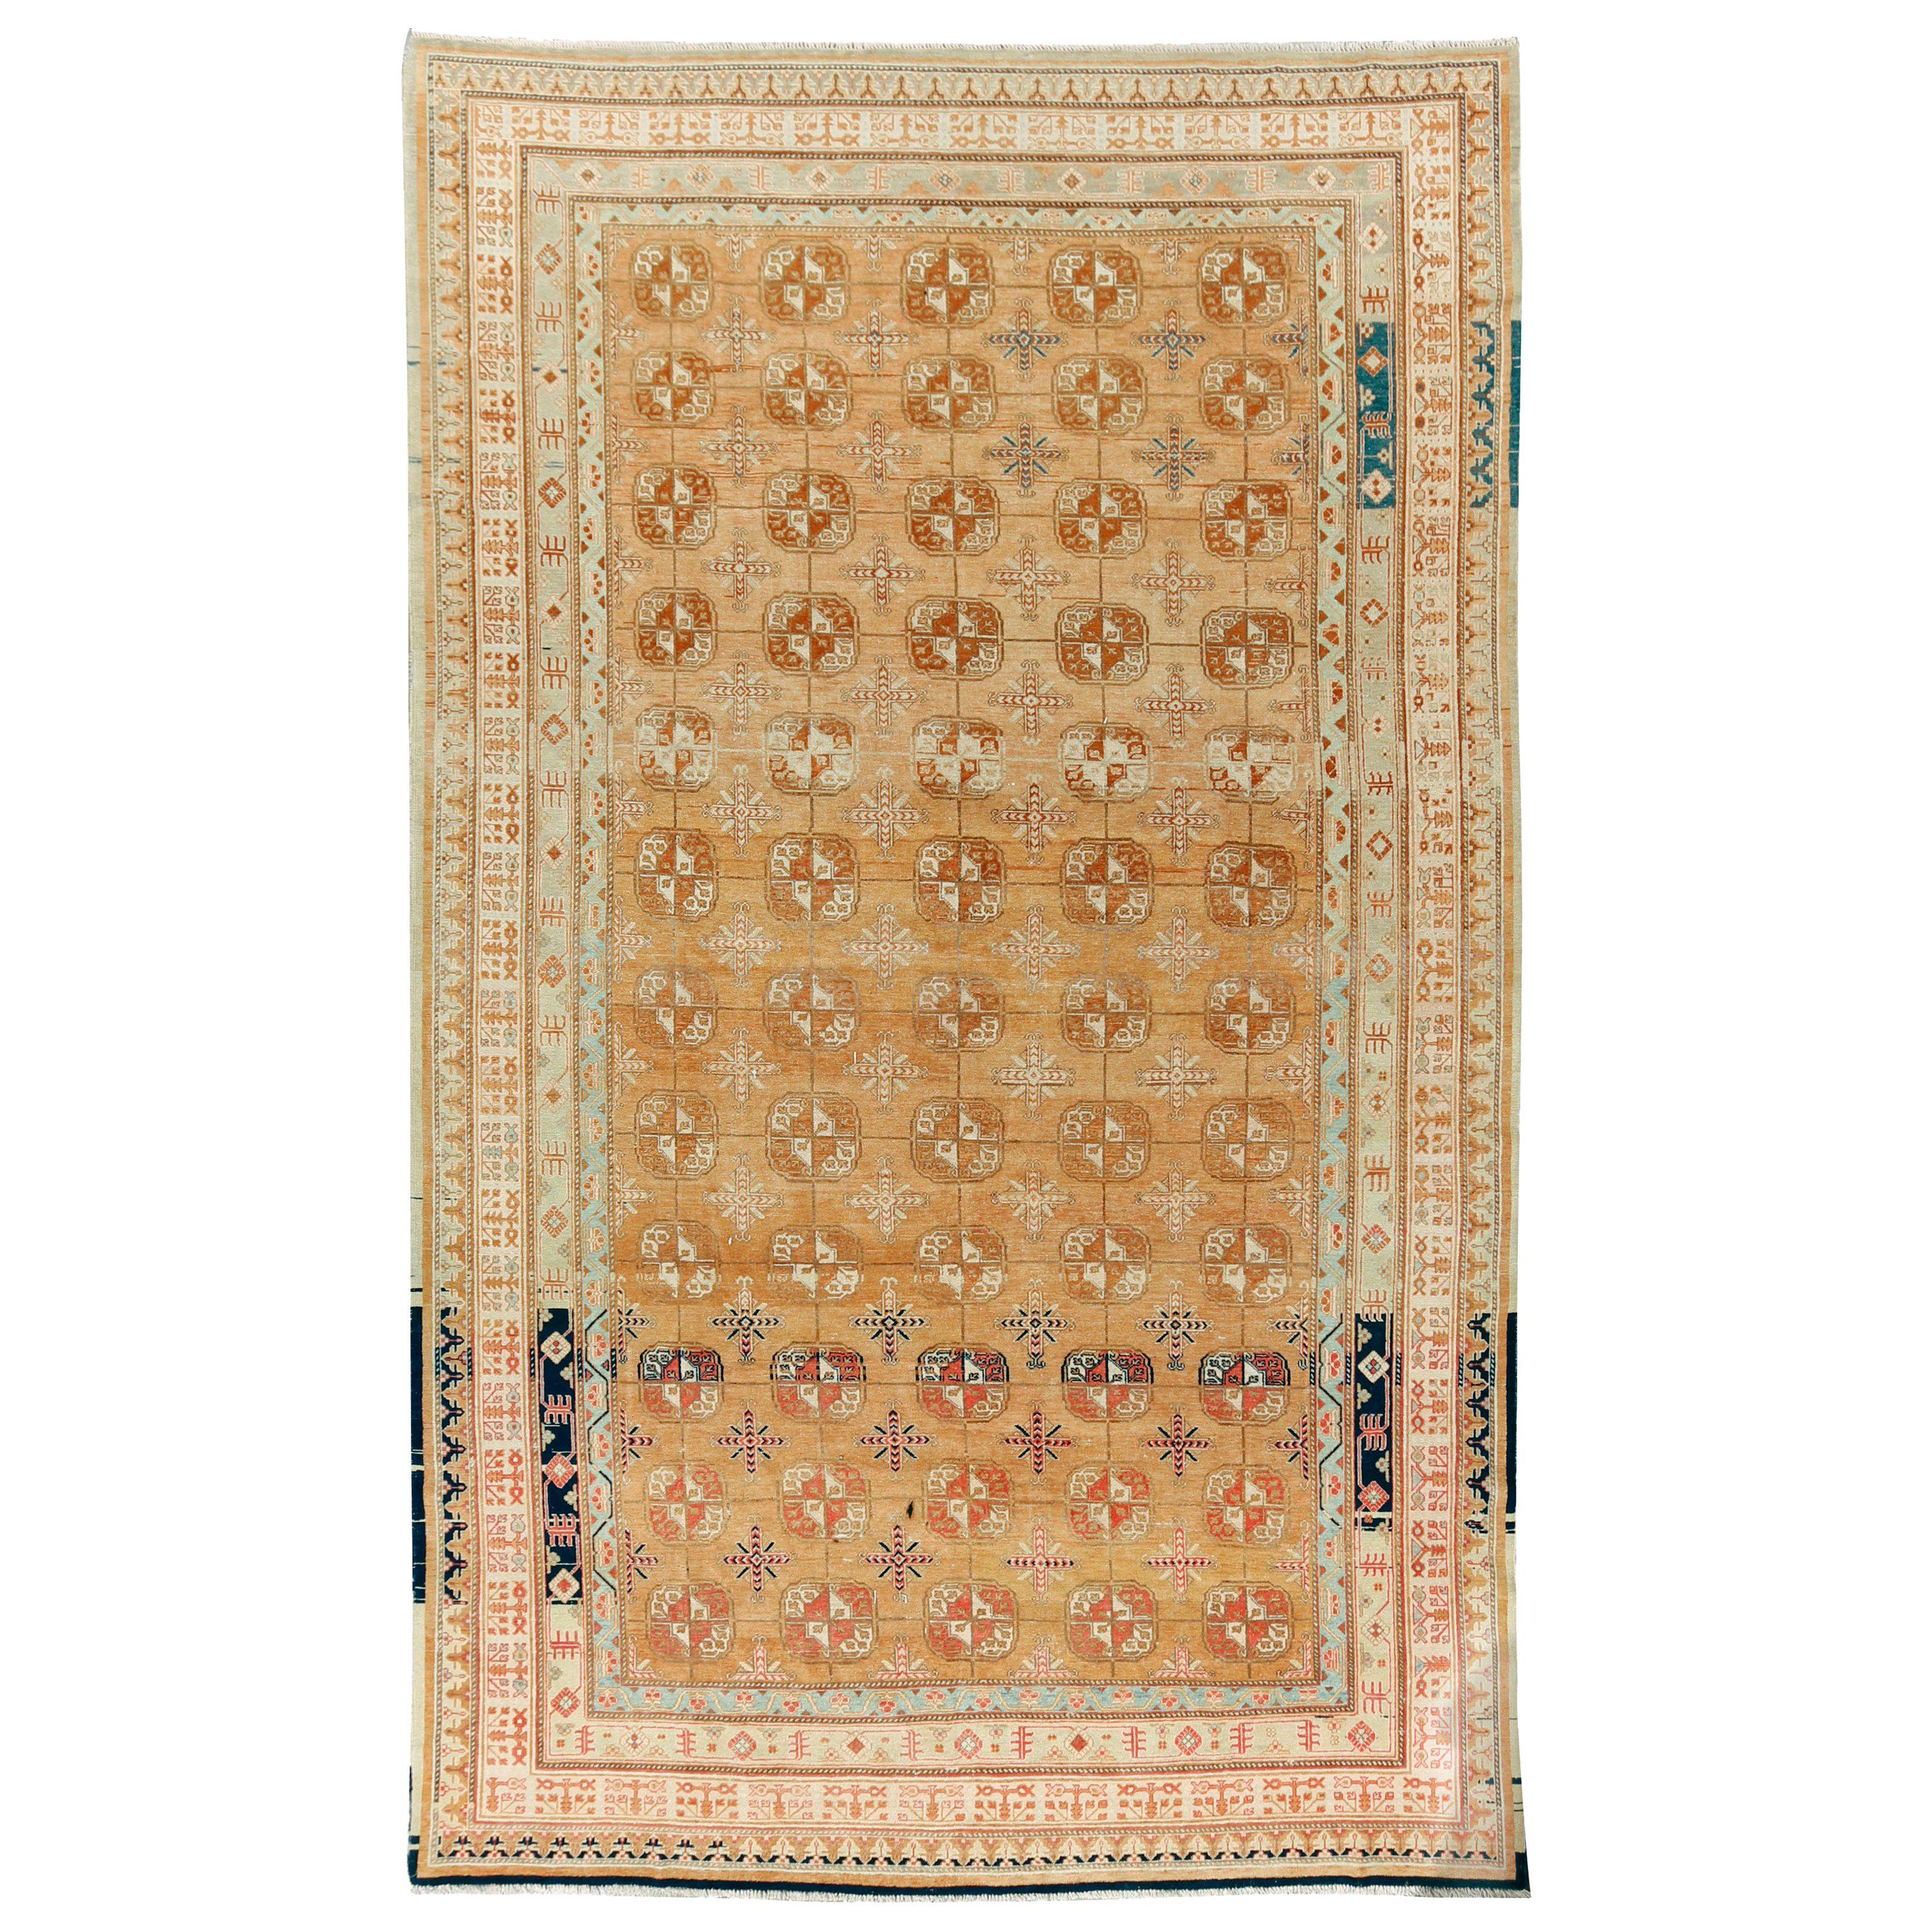 Antique Khotan Carpet Rug